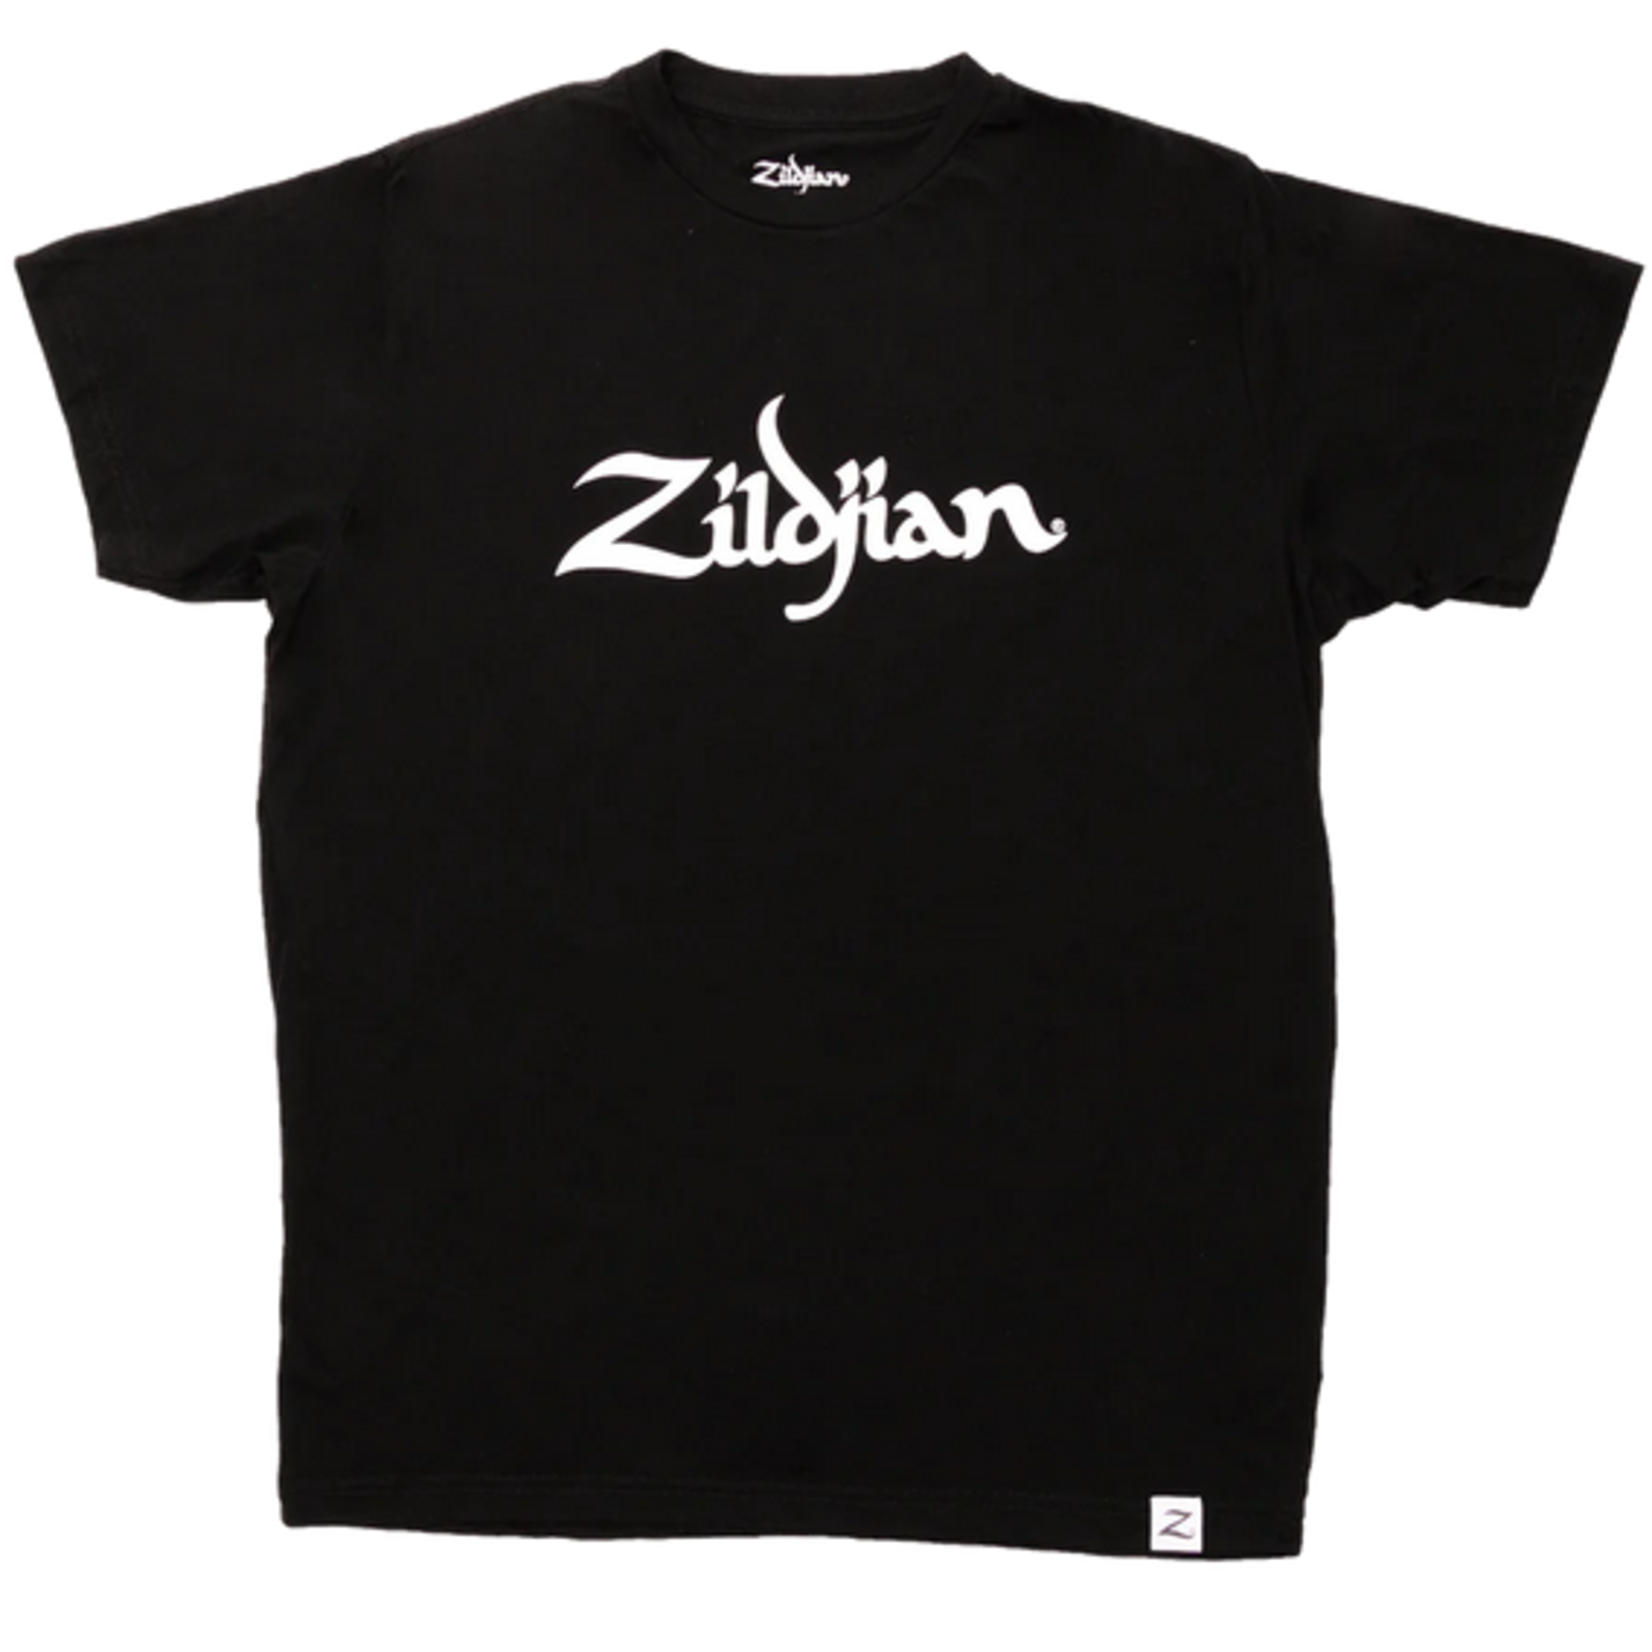 Zildjian Classic Logo Tee - Black (Medium)